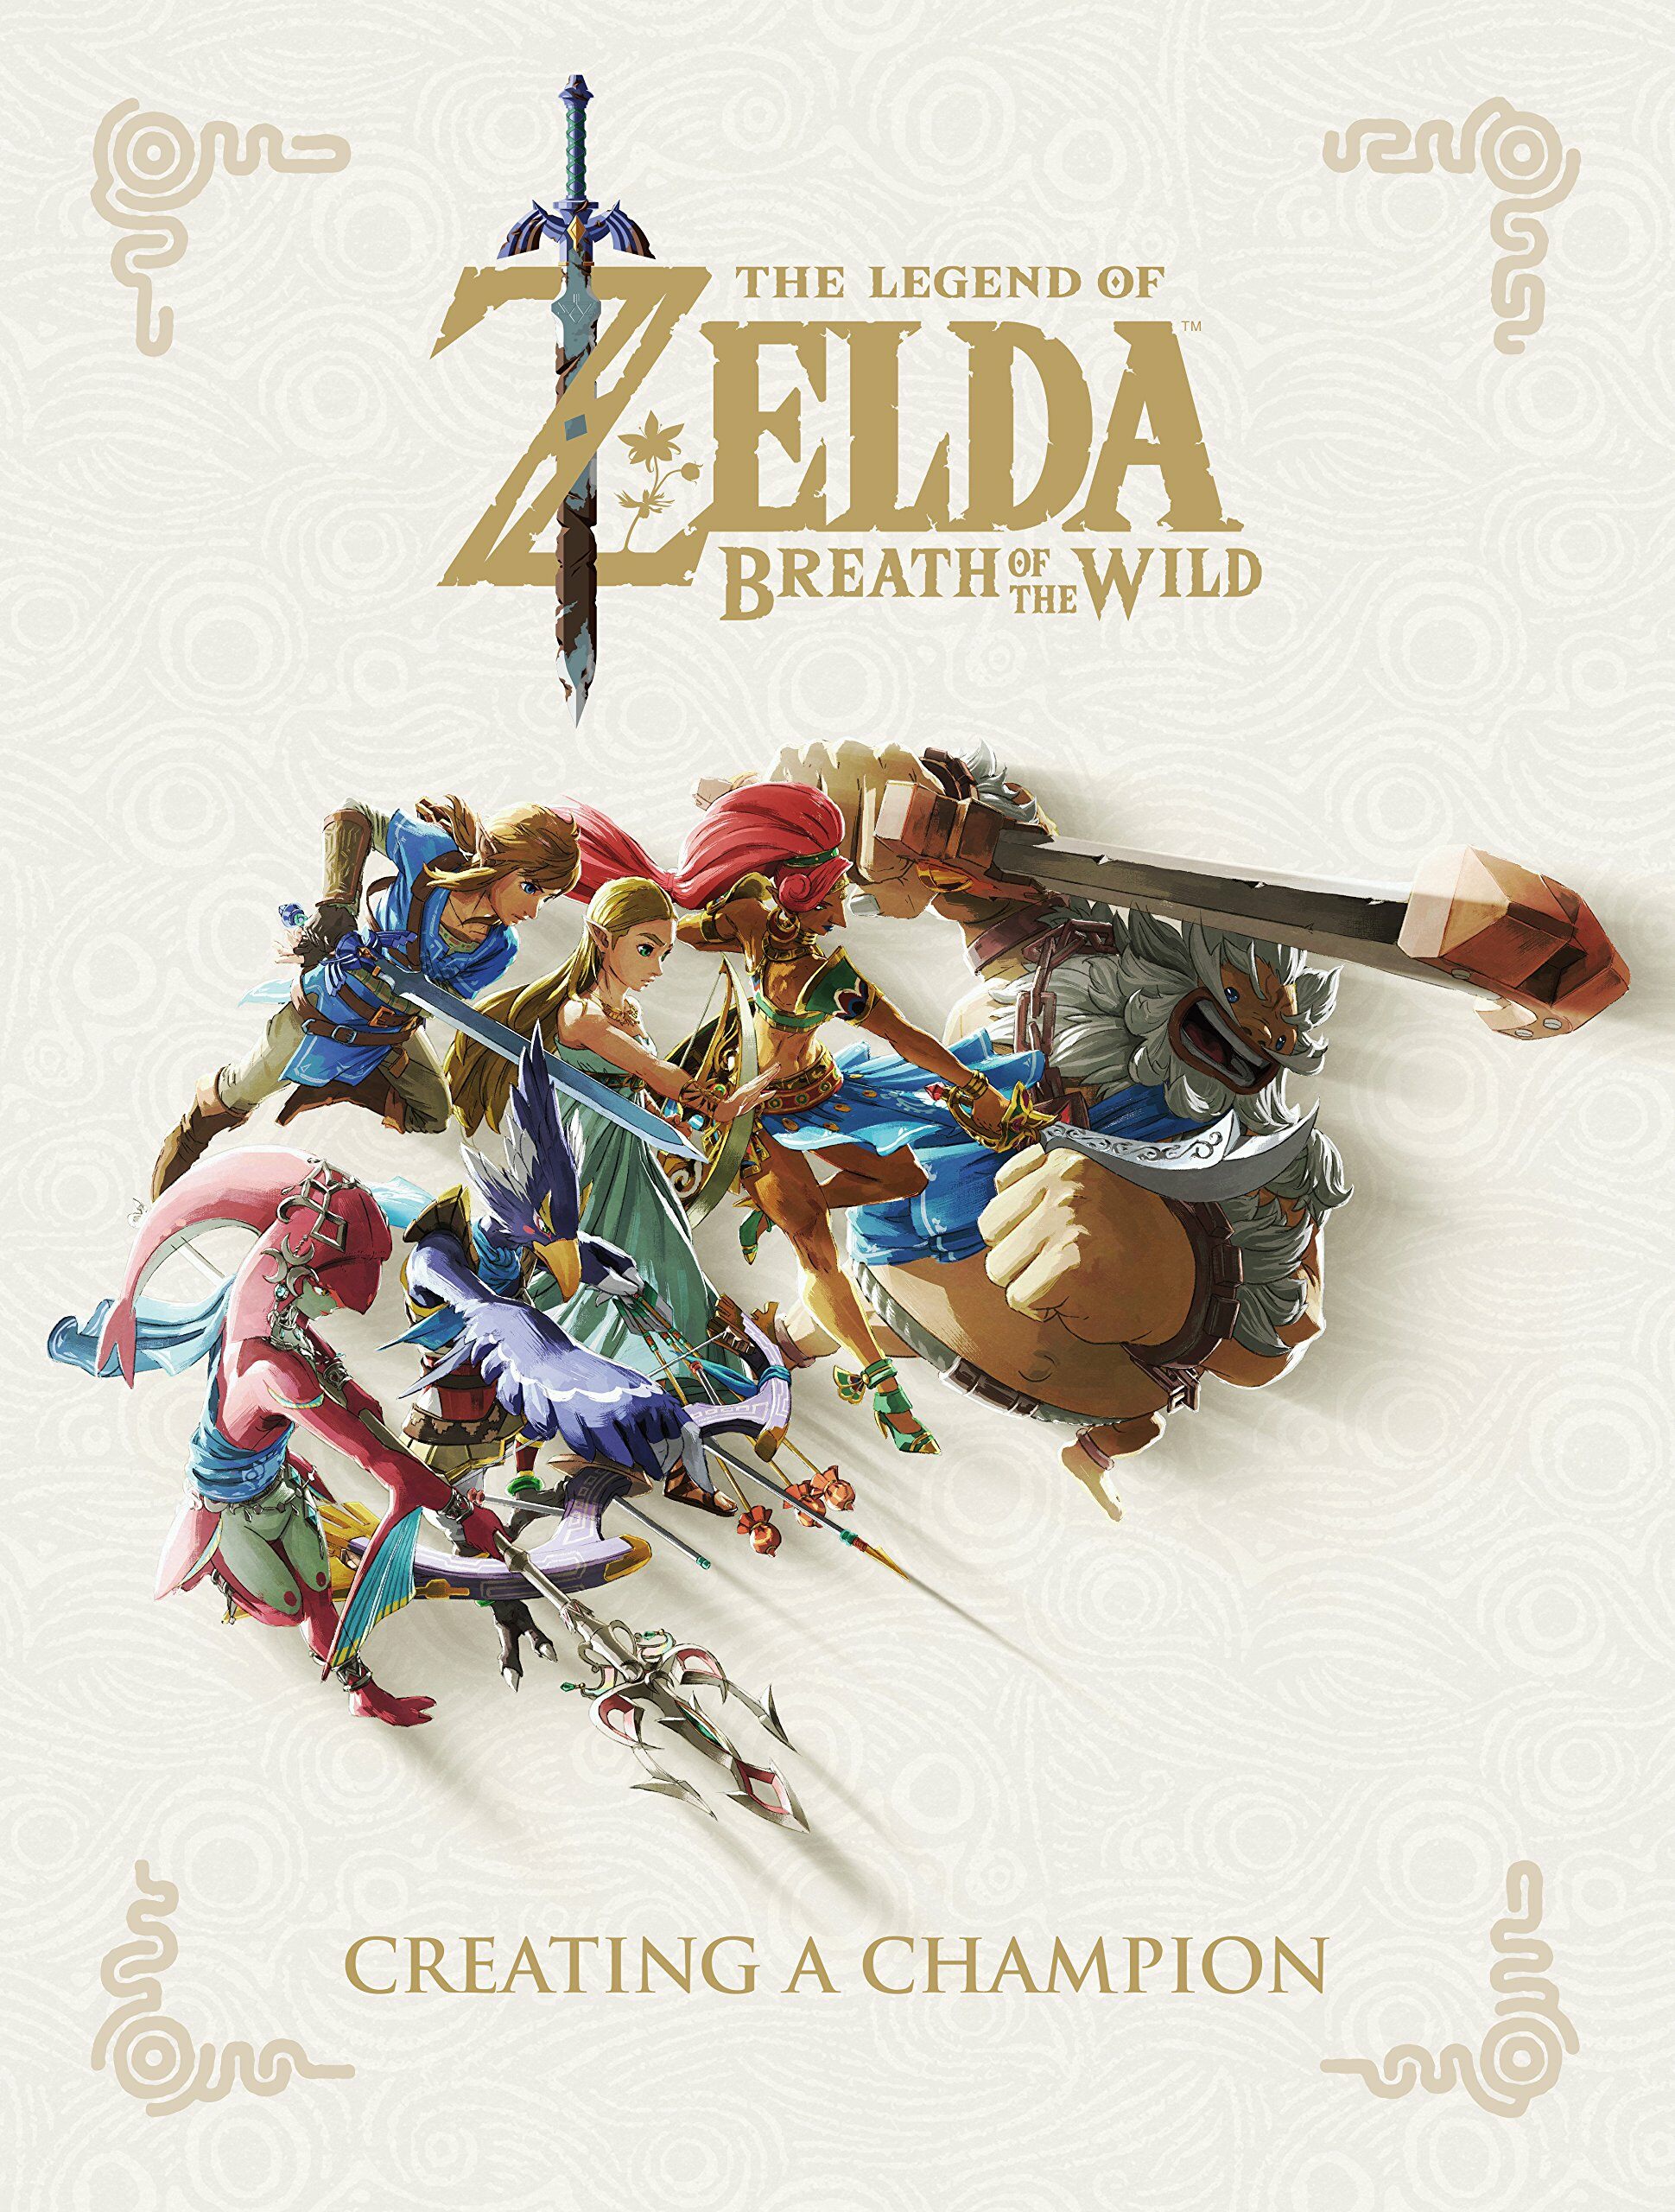 The Legend of Zelda: Breath of the Wild - Creating a Champion: 젤다의 전설 - 브레스 오브 와일드: 챔피언 만들기 (Hardcover)